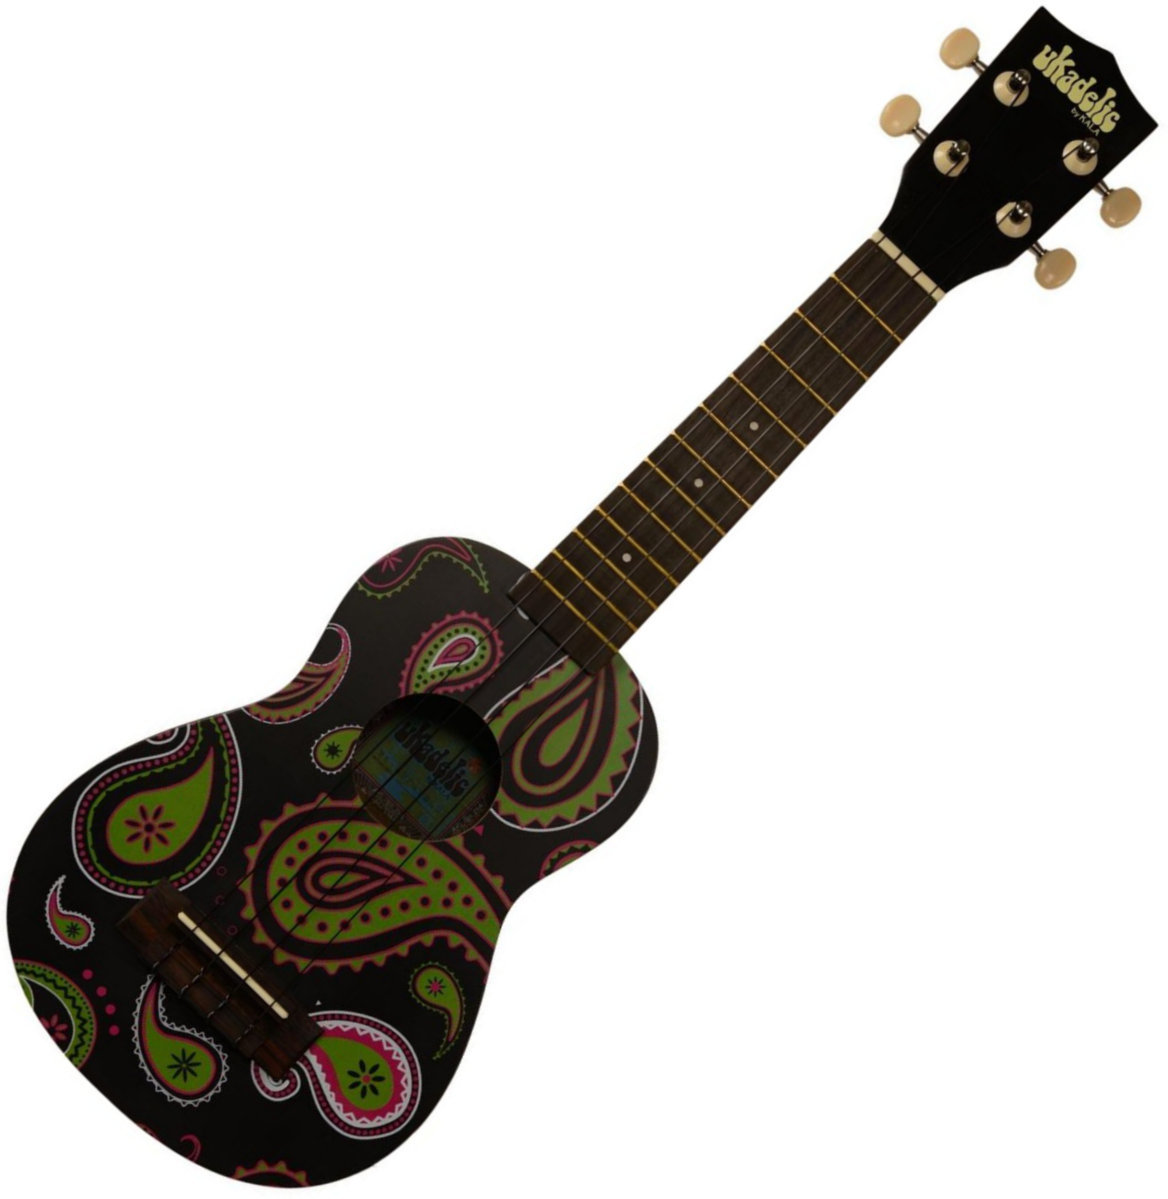 Sopránové ukulele Kala Ukadelic Soprano Bright Pink and Green Paisleys on Black